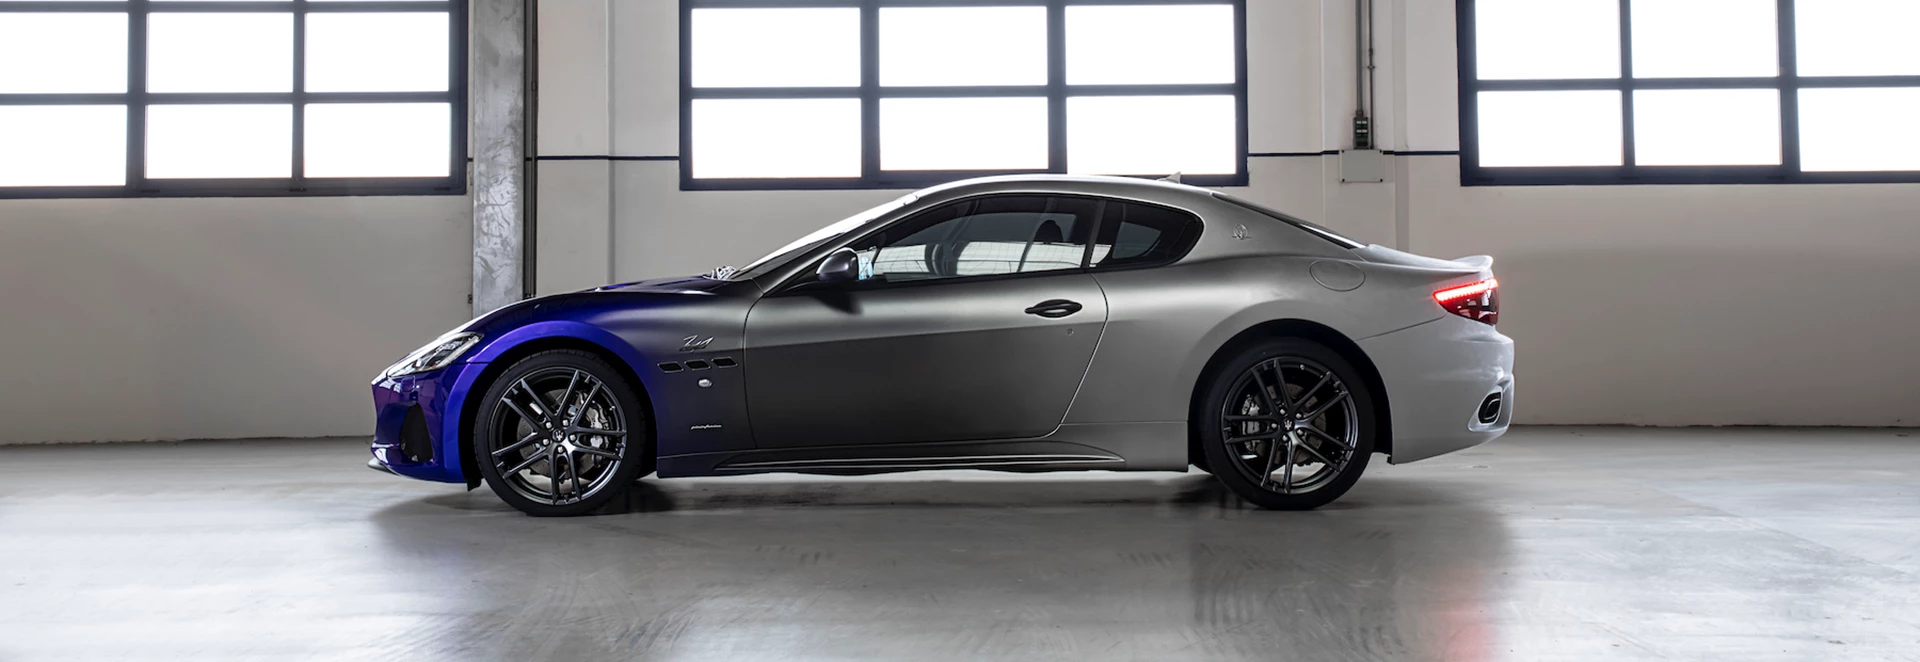 Maserati creates one-off Granturismo to mark the end of production